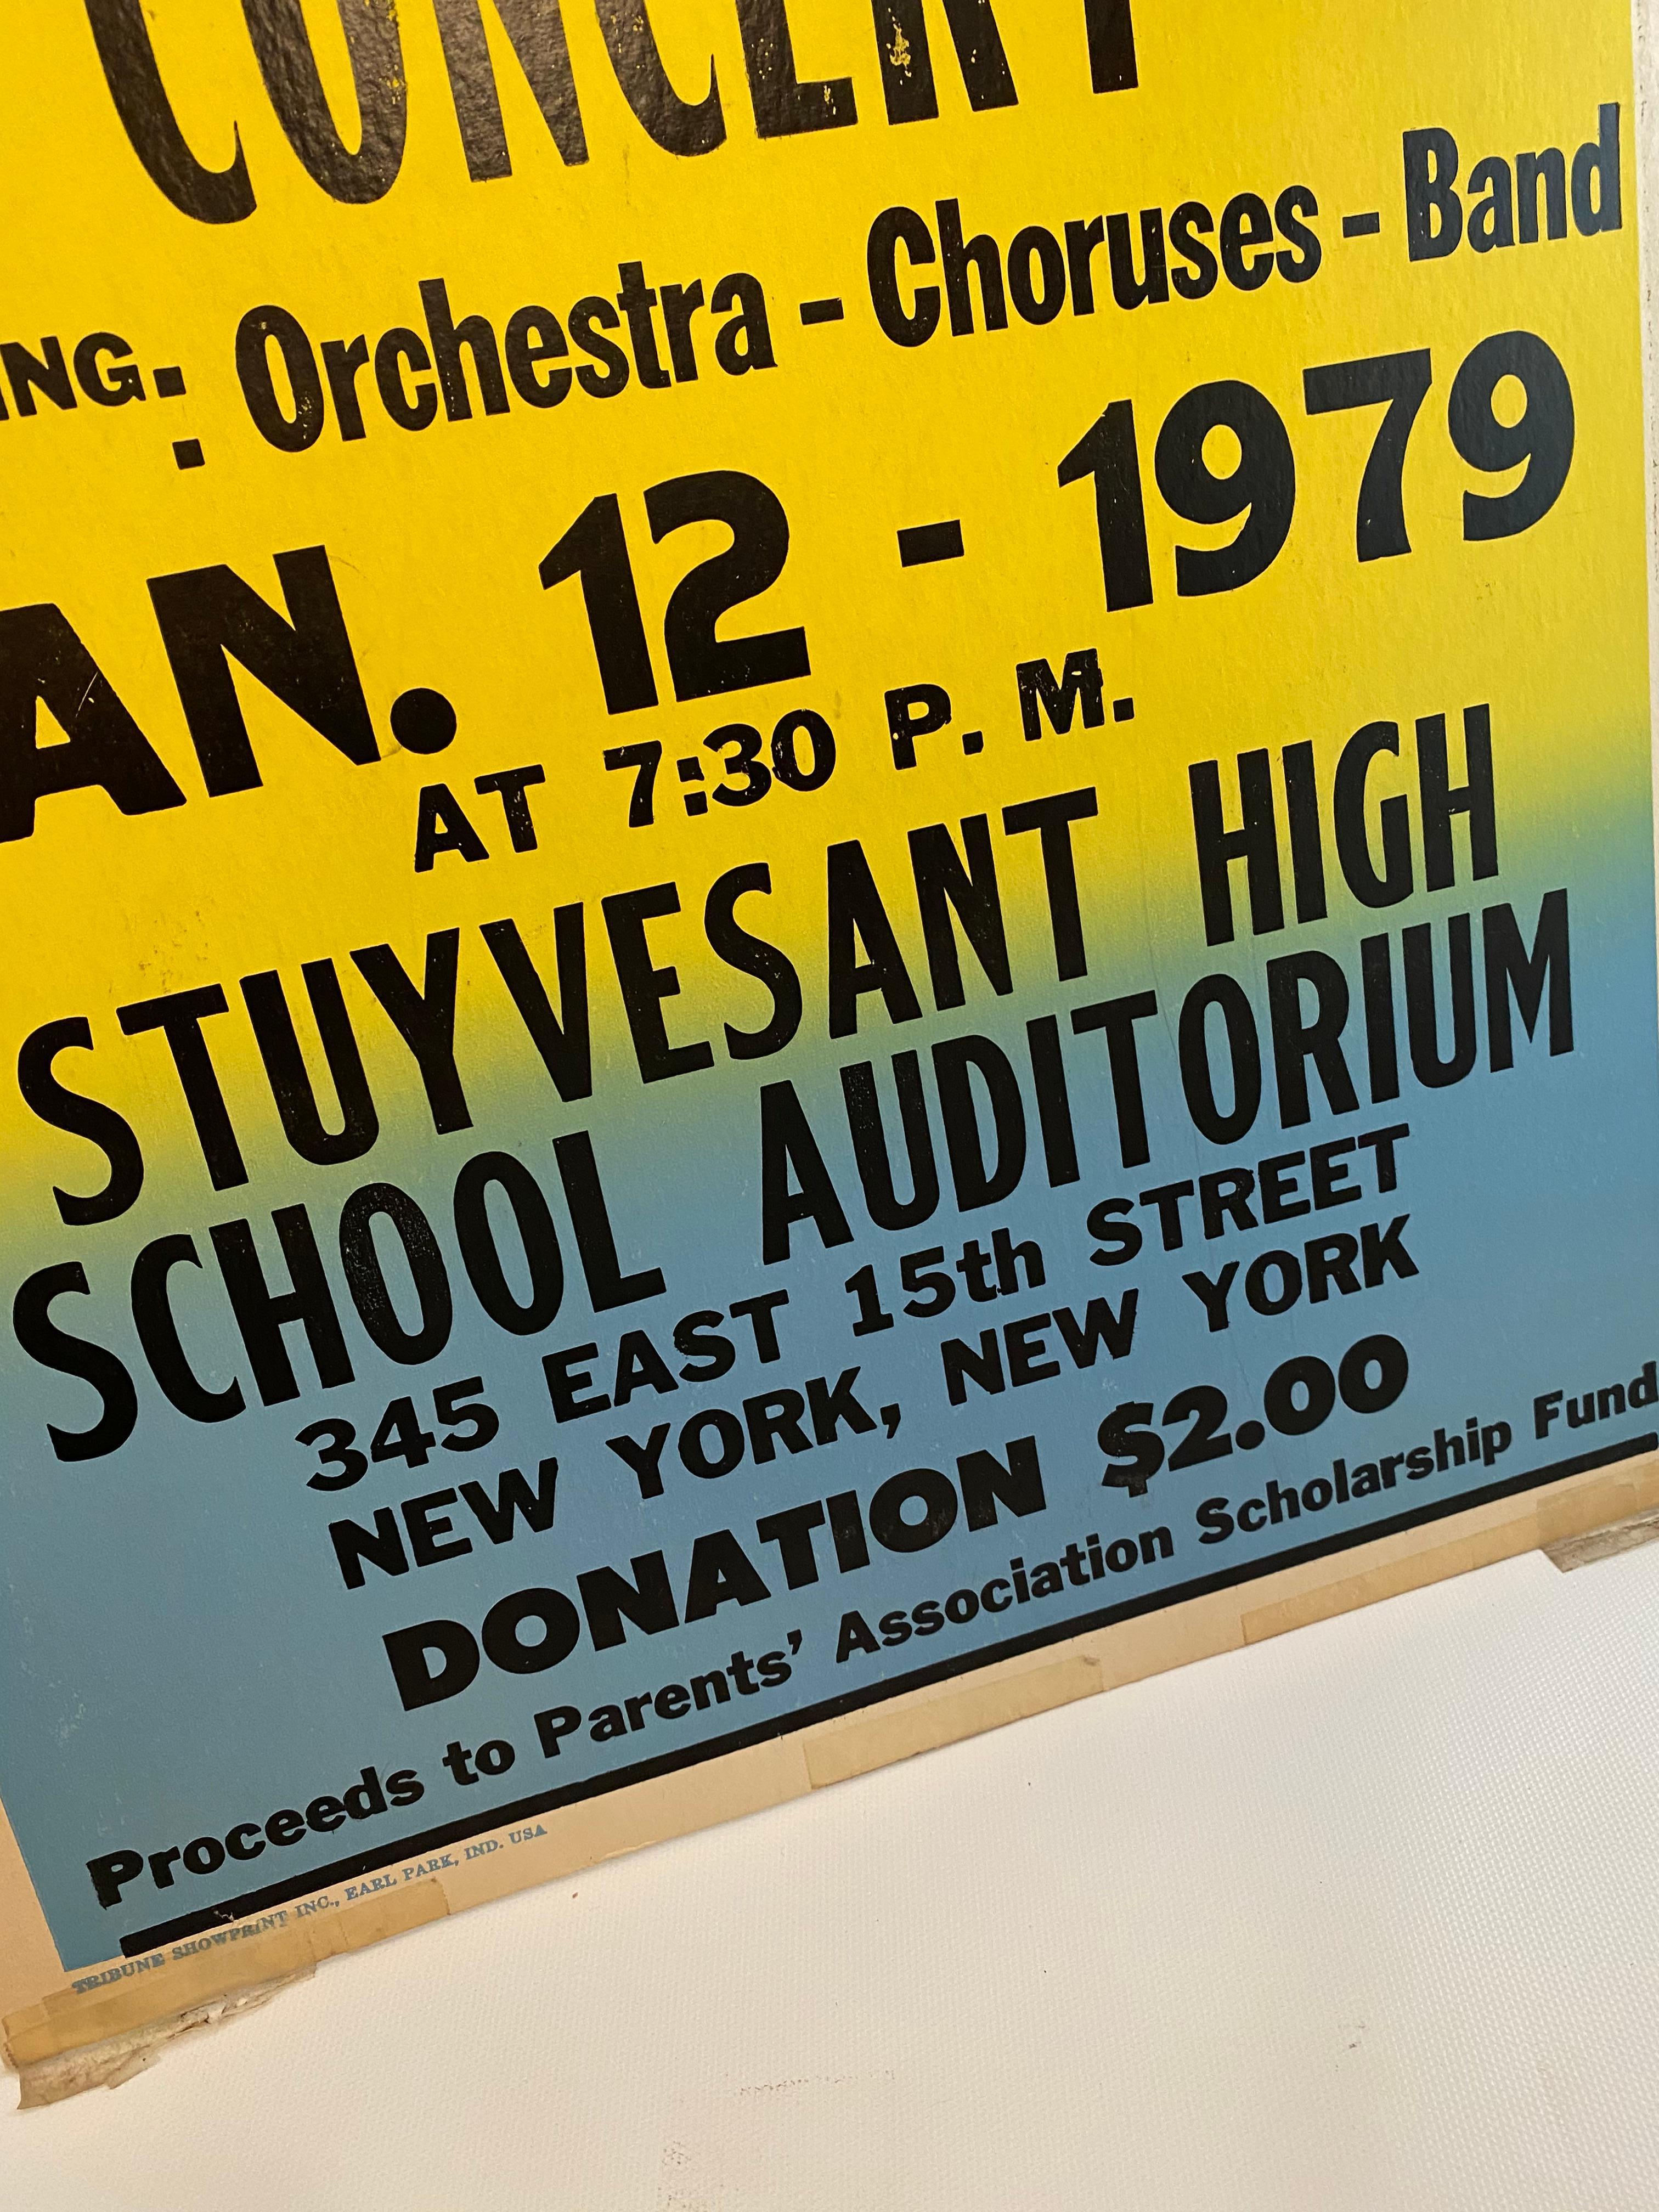 Schoolhouse 1979 New York City Stuyvesant High School Winter Pops Concert Poster For Sale